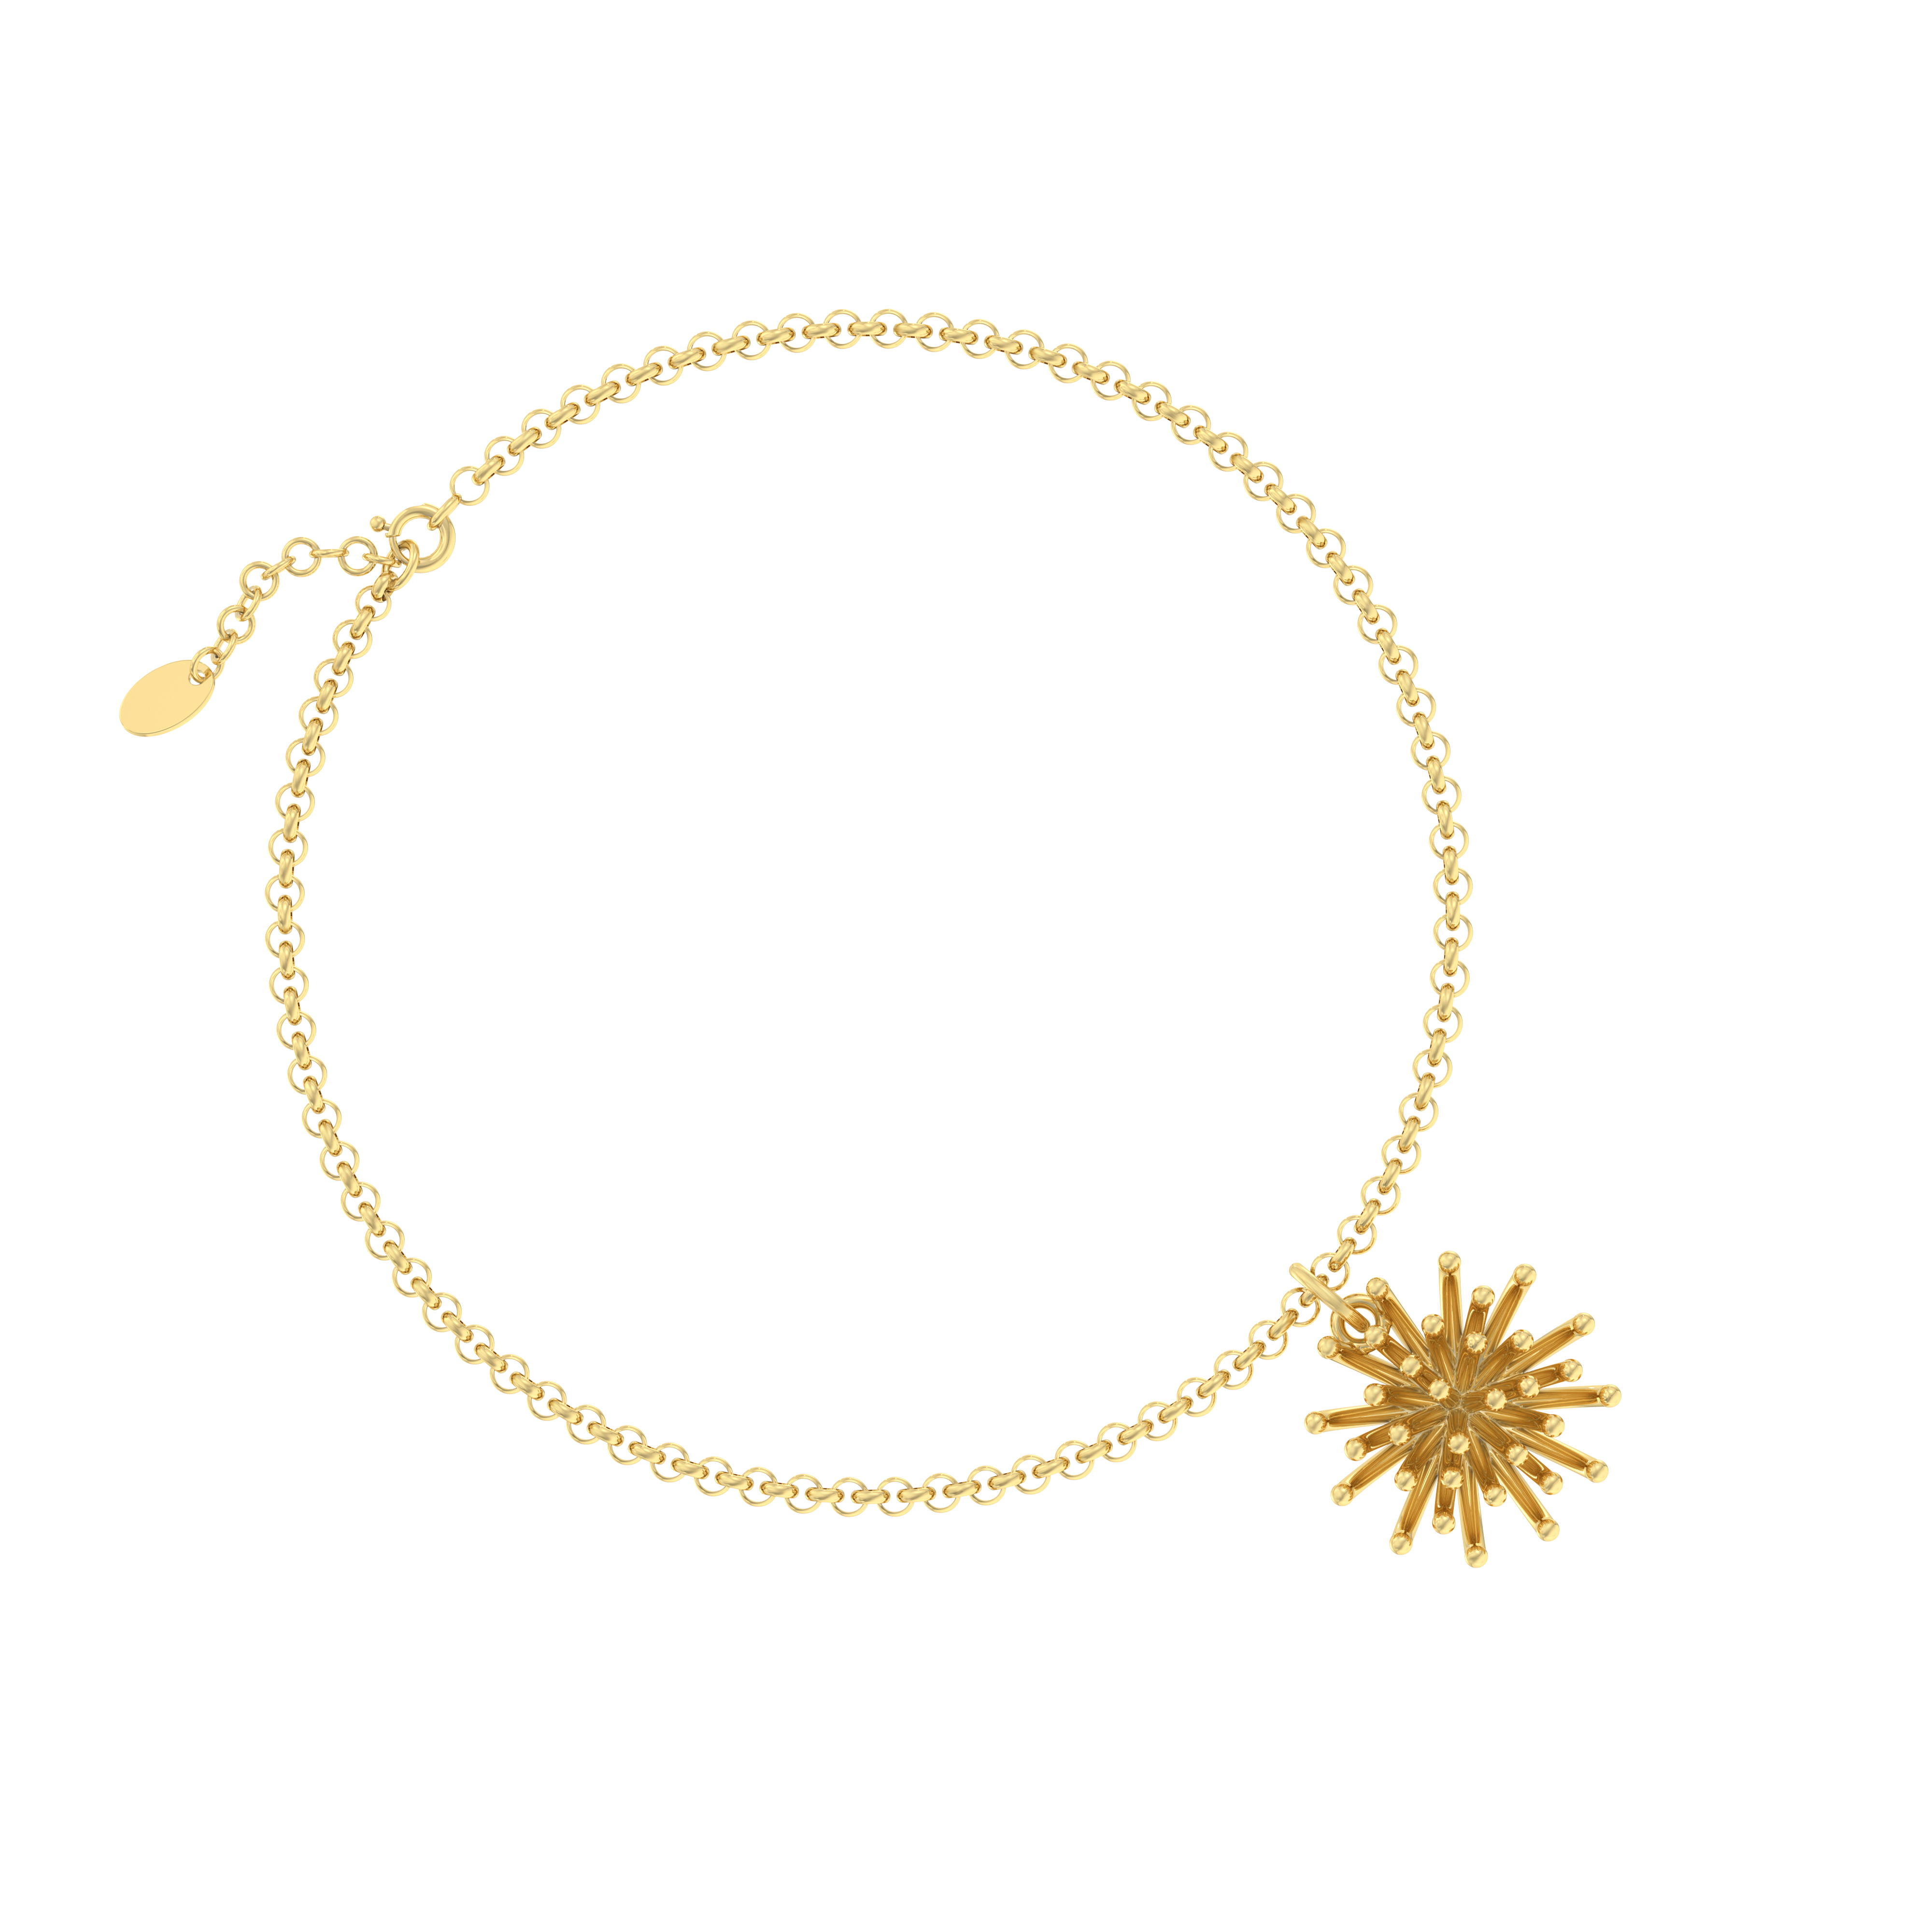 Anemone bracelet